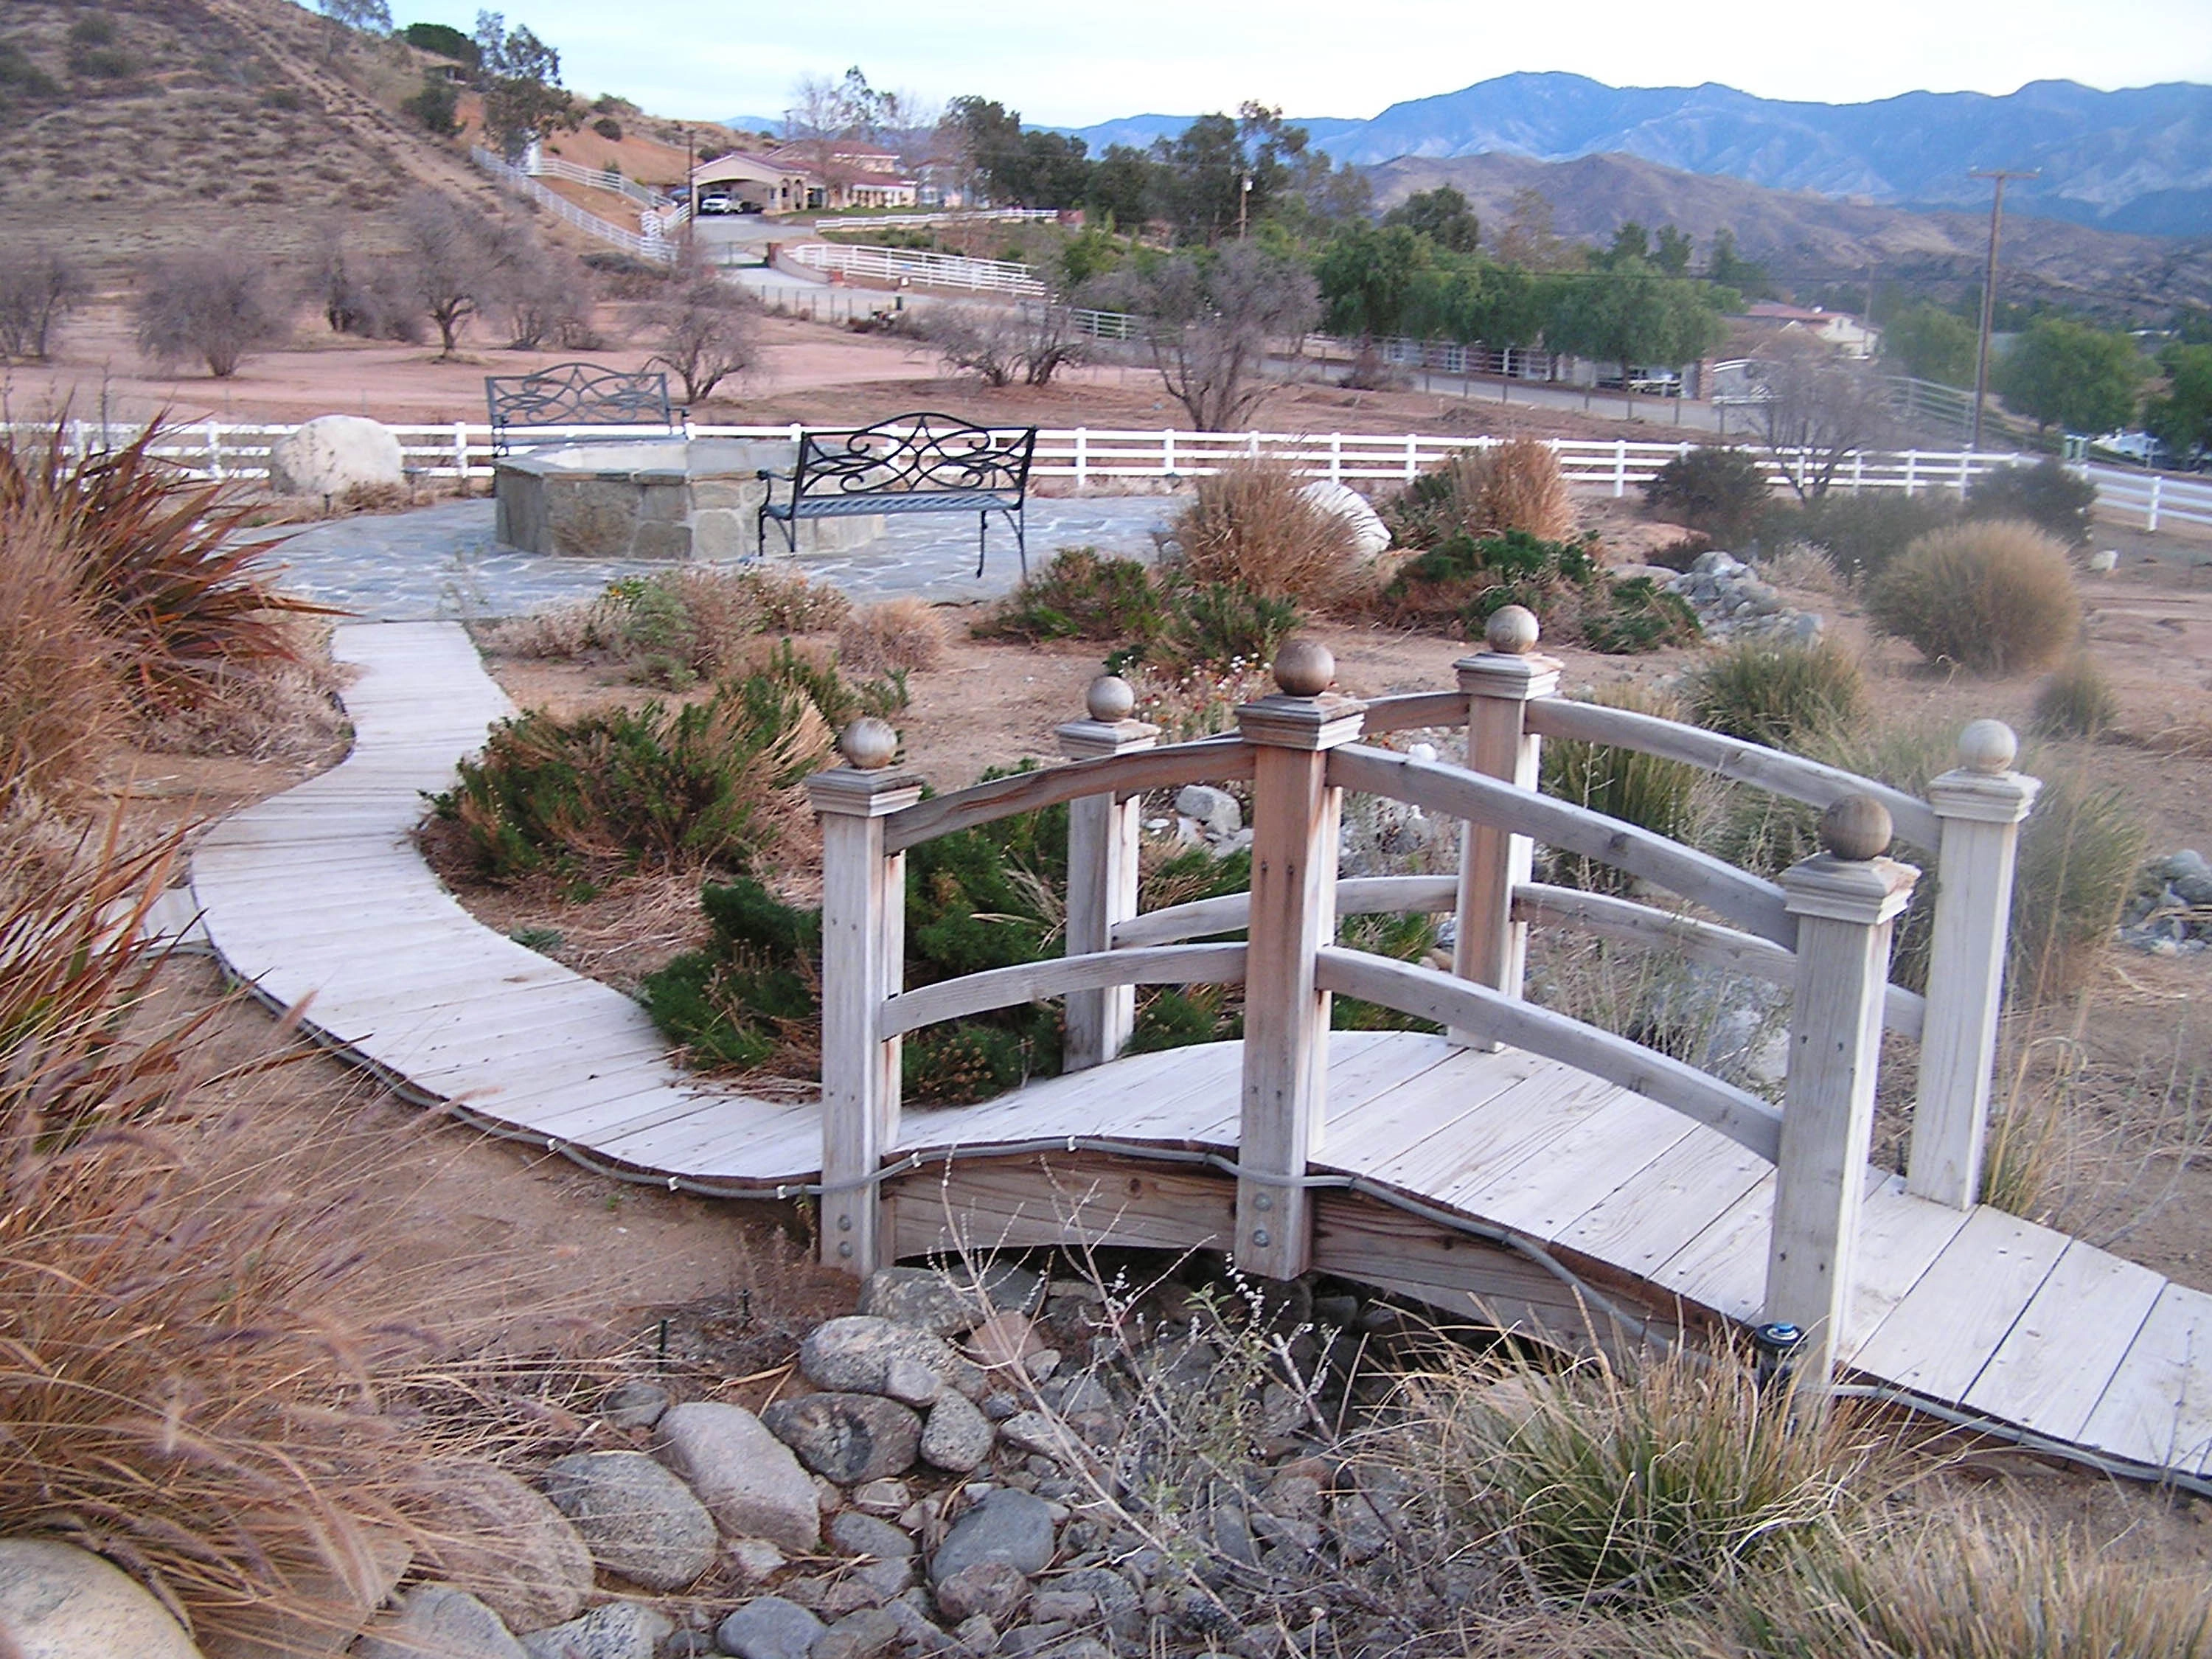 Bridge and desert landscape